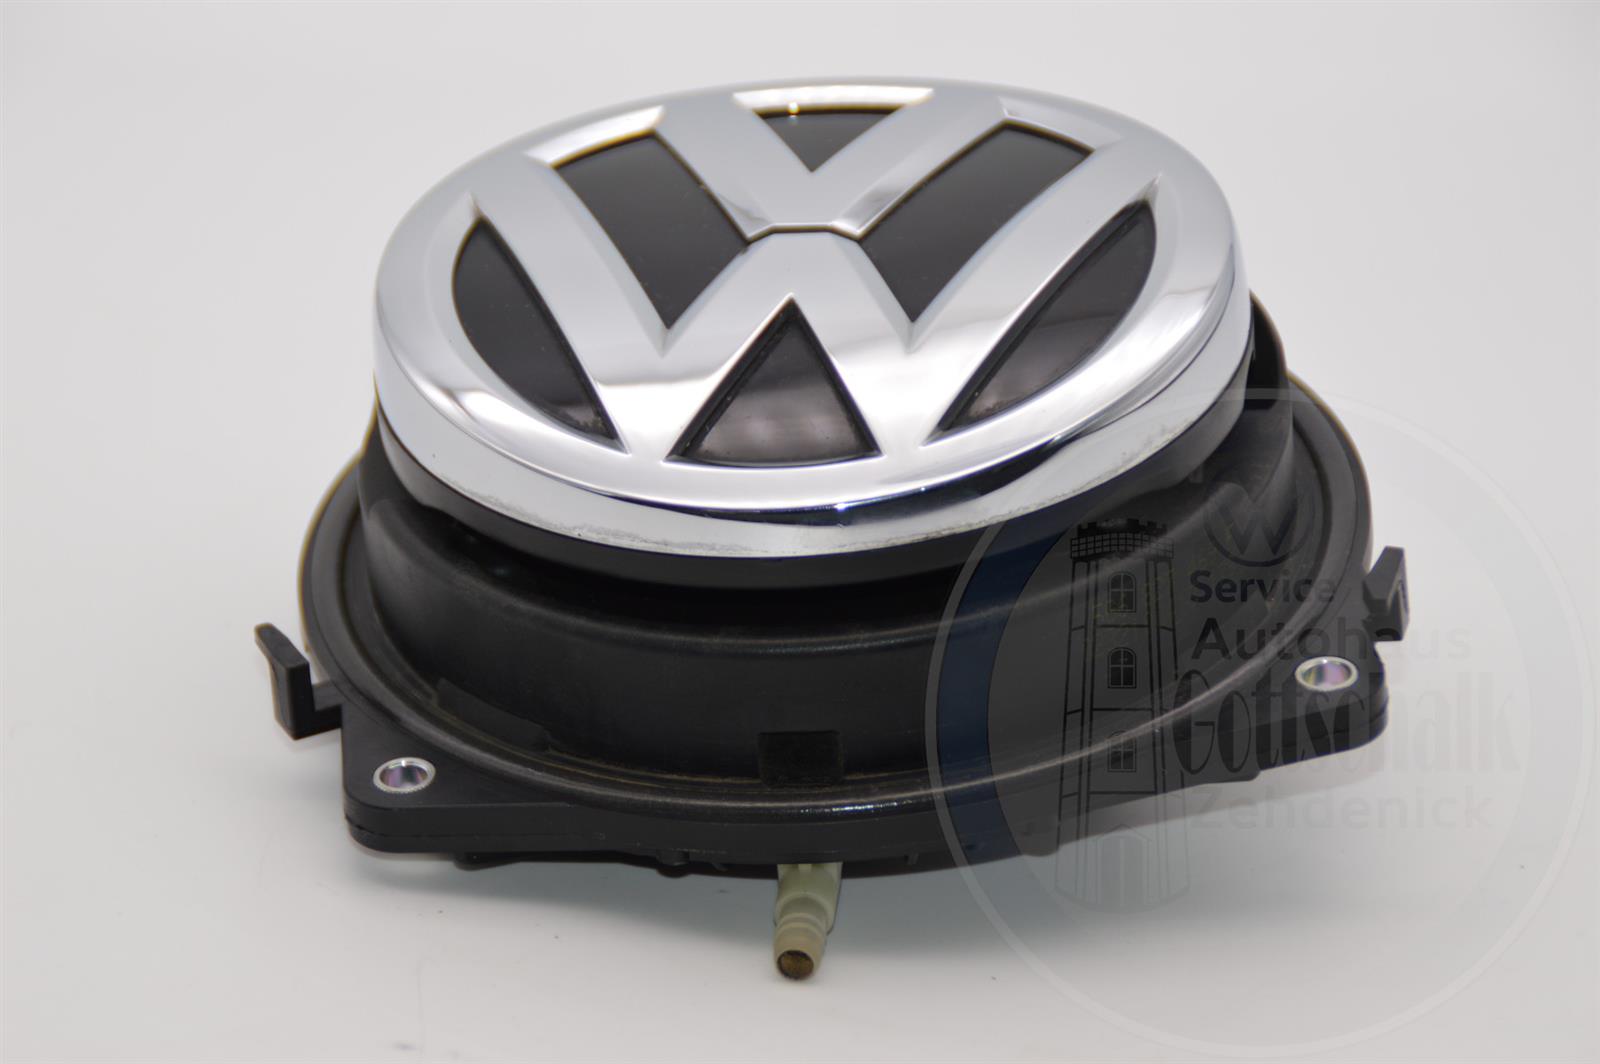 VW Heckklappenschloss - Golf VI / Golf Plus / Tiguan, Elektrik, Volkswagen Original Teile, Volkswagen, Mense Onlineshop